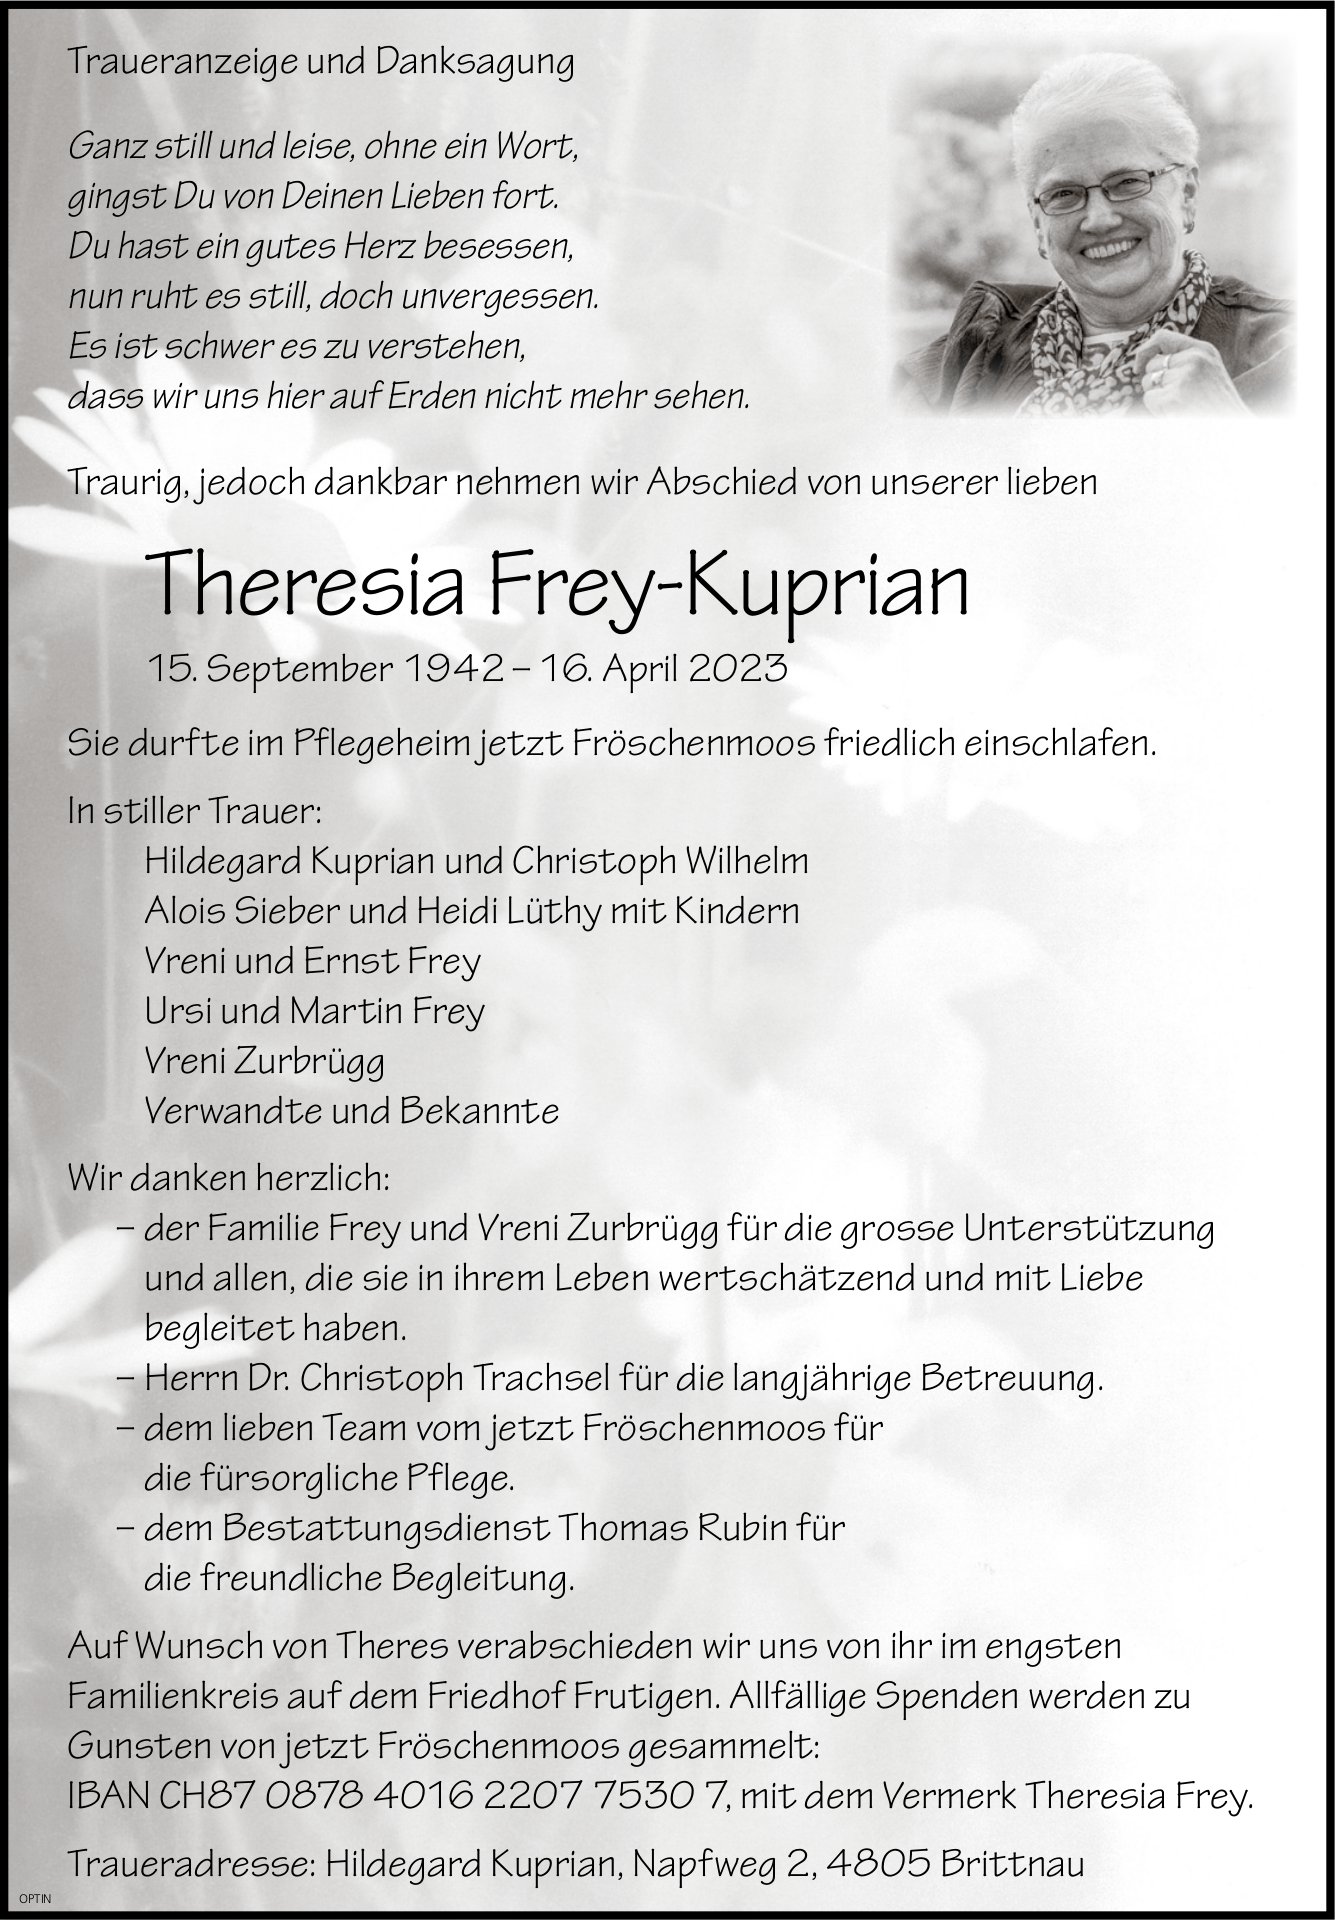 Theresia Frey-Kuprian, April 2023 / TA